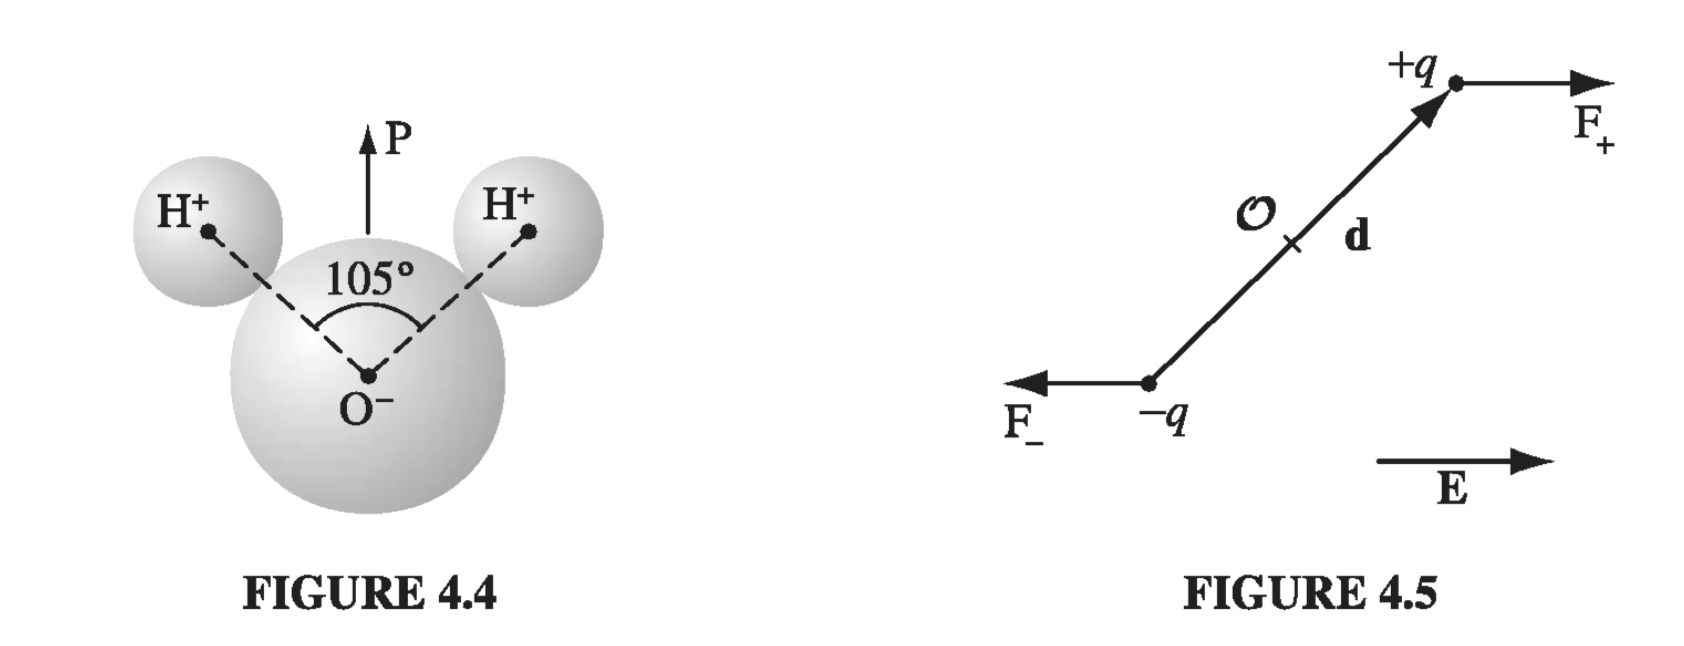 Figure 4.4